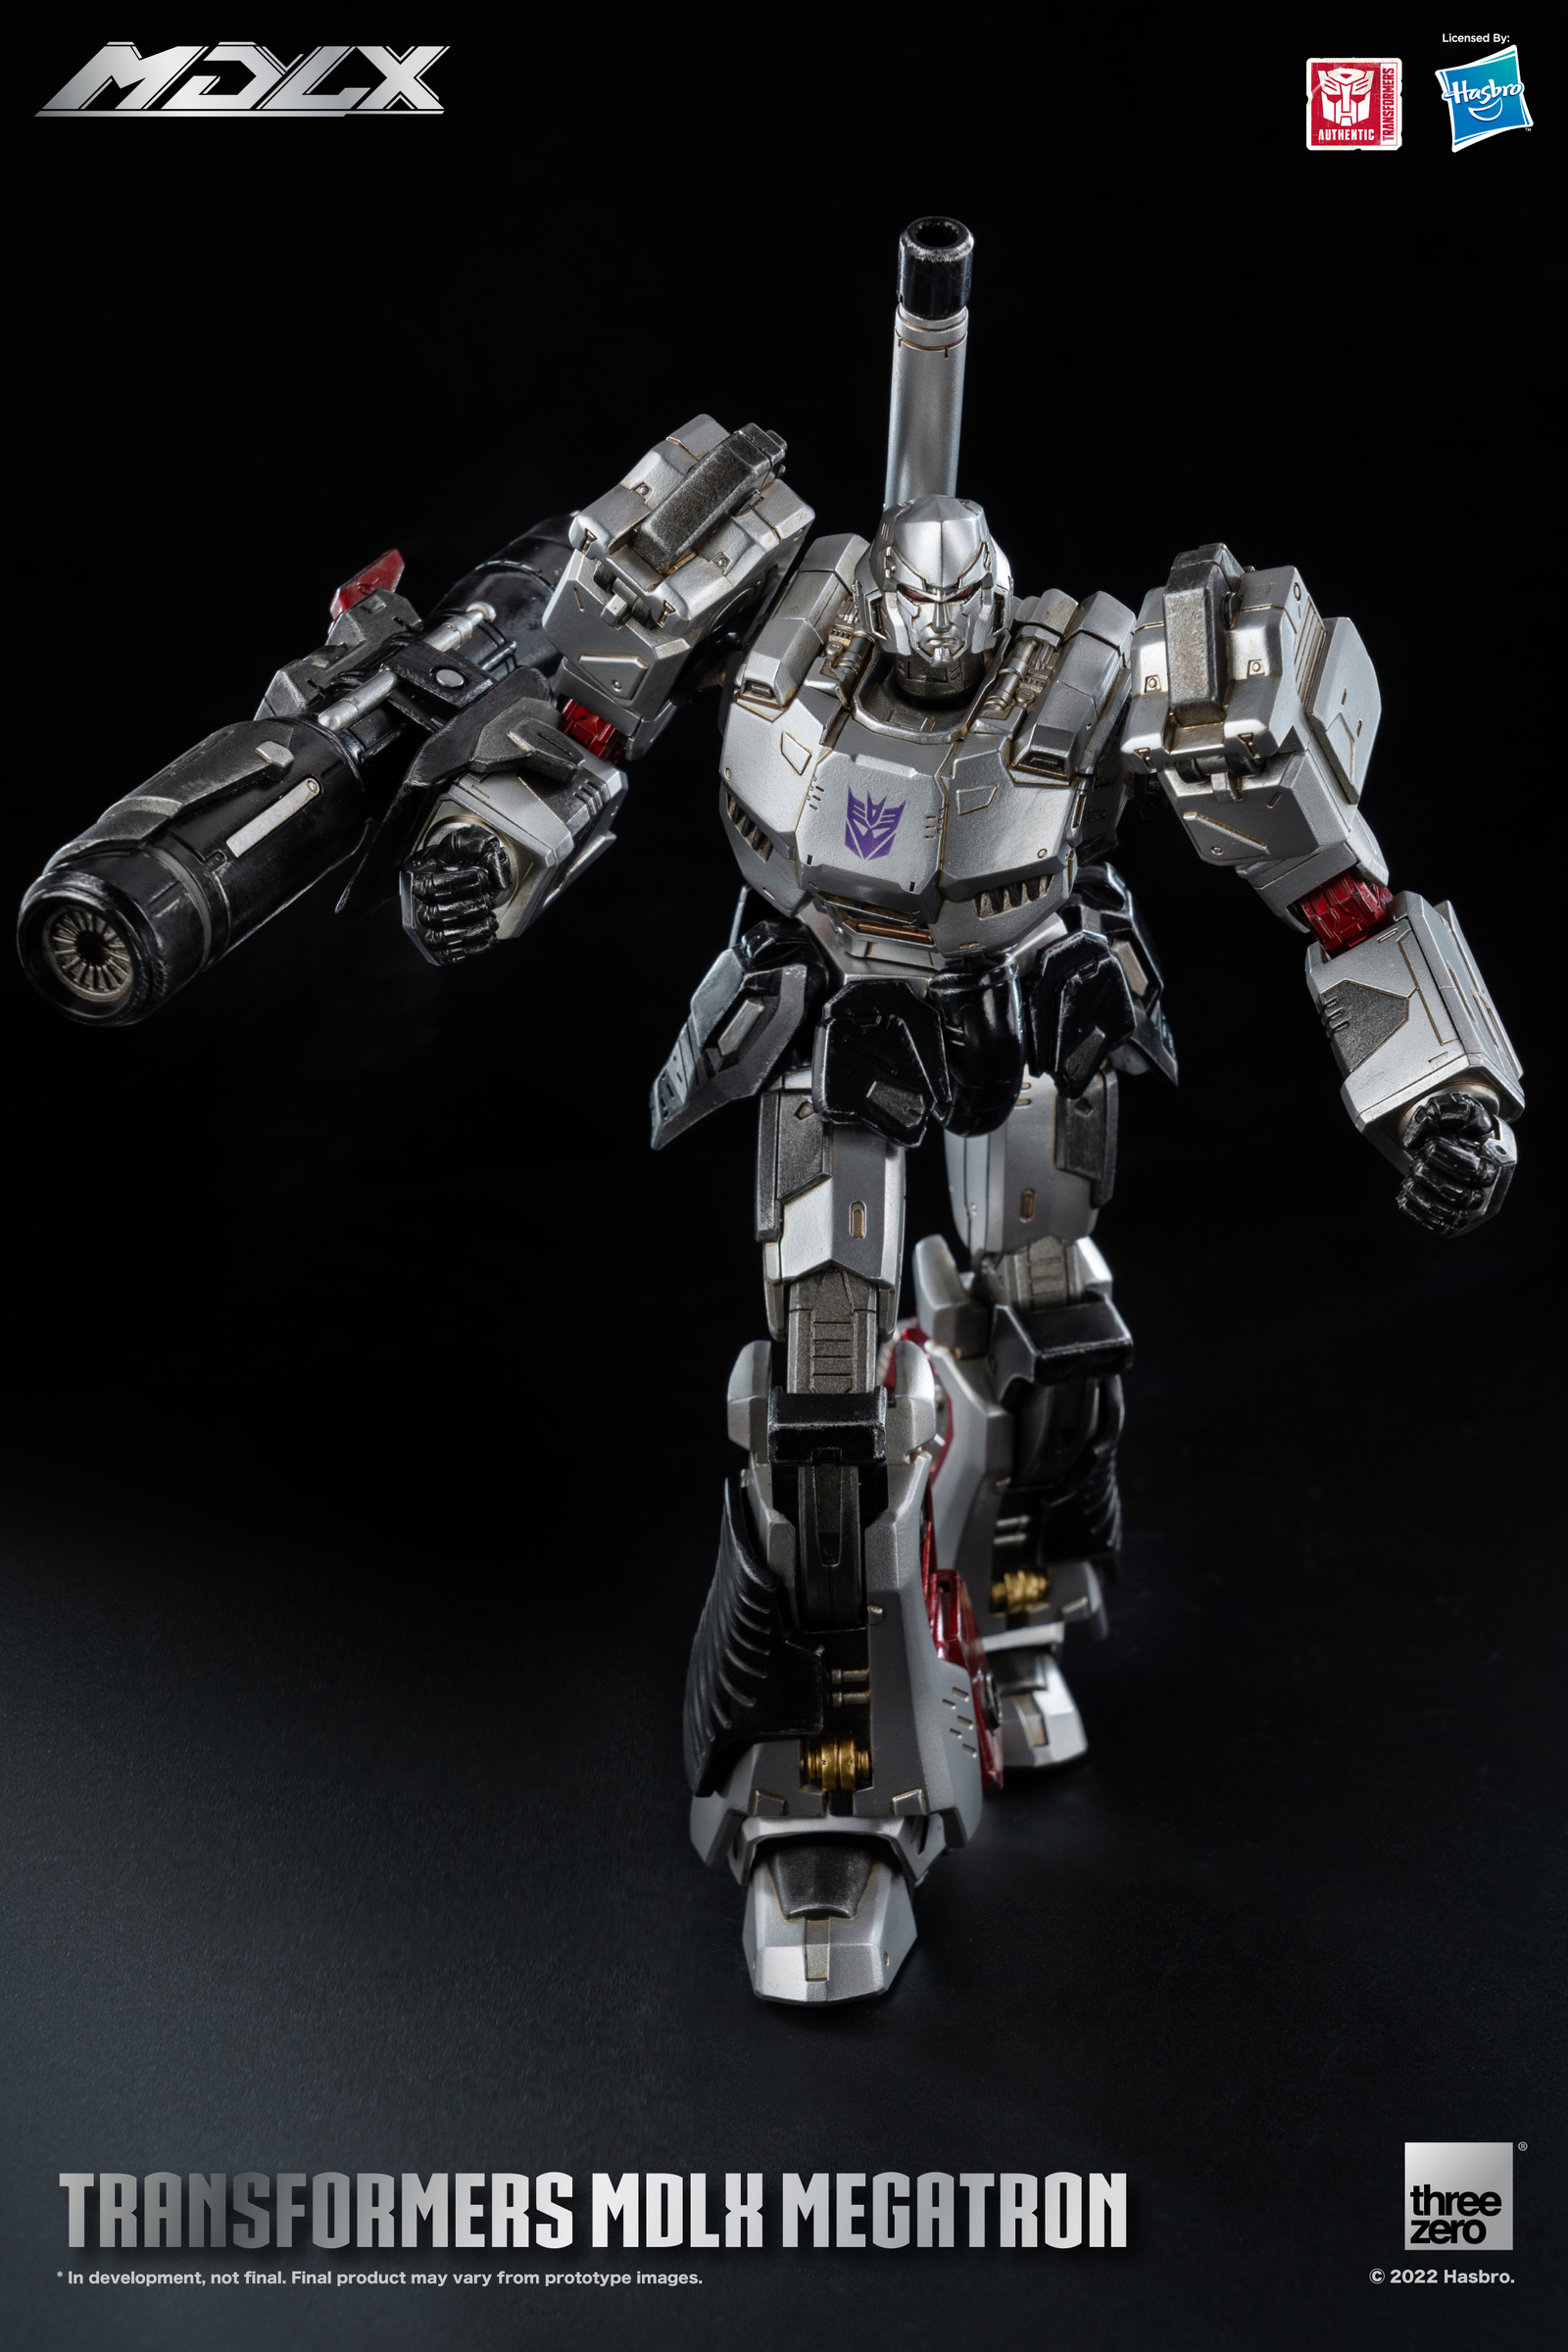  Transformers MDLX Megatron (4)